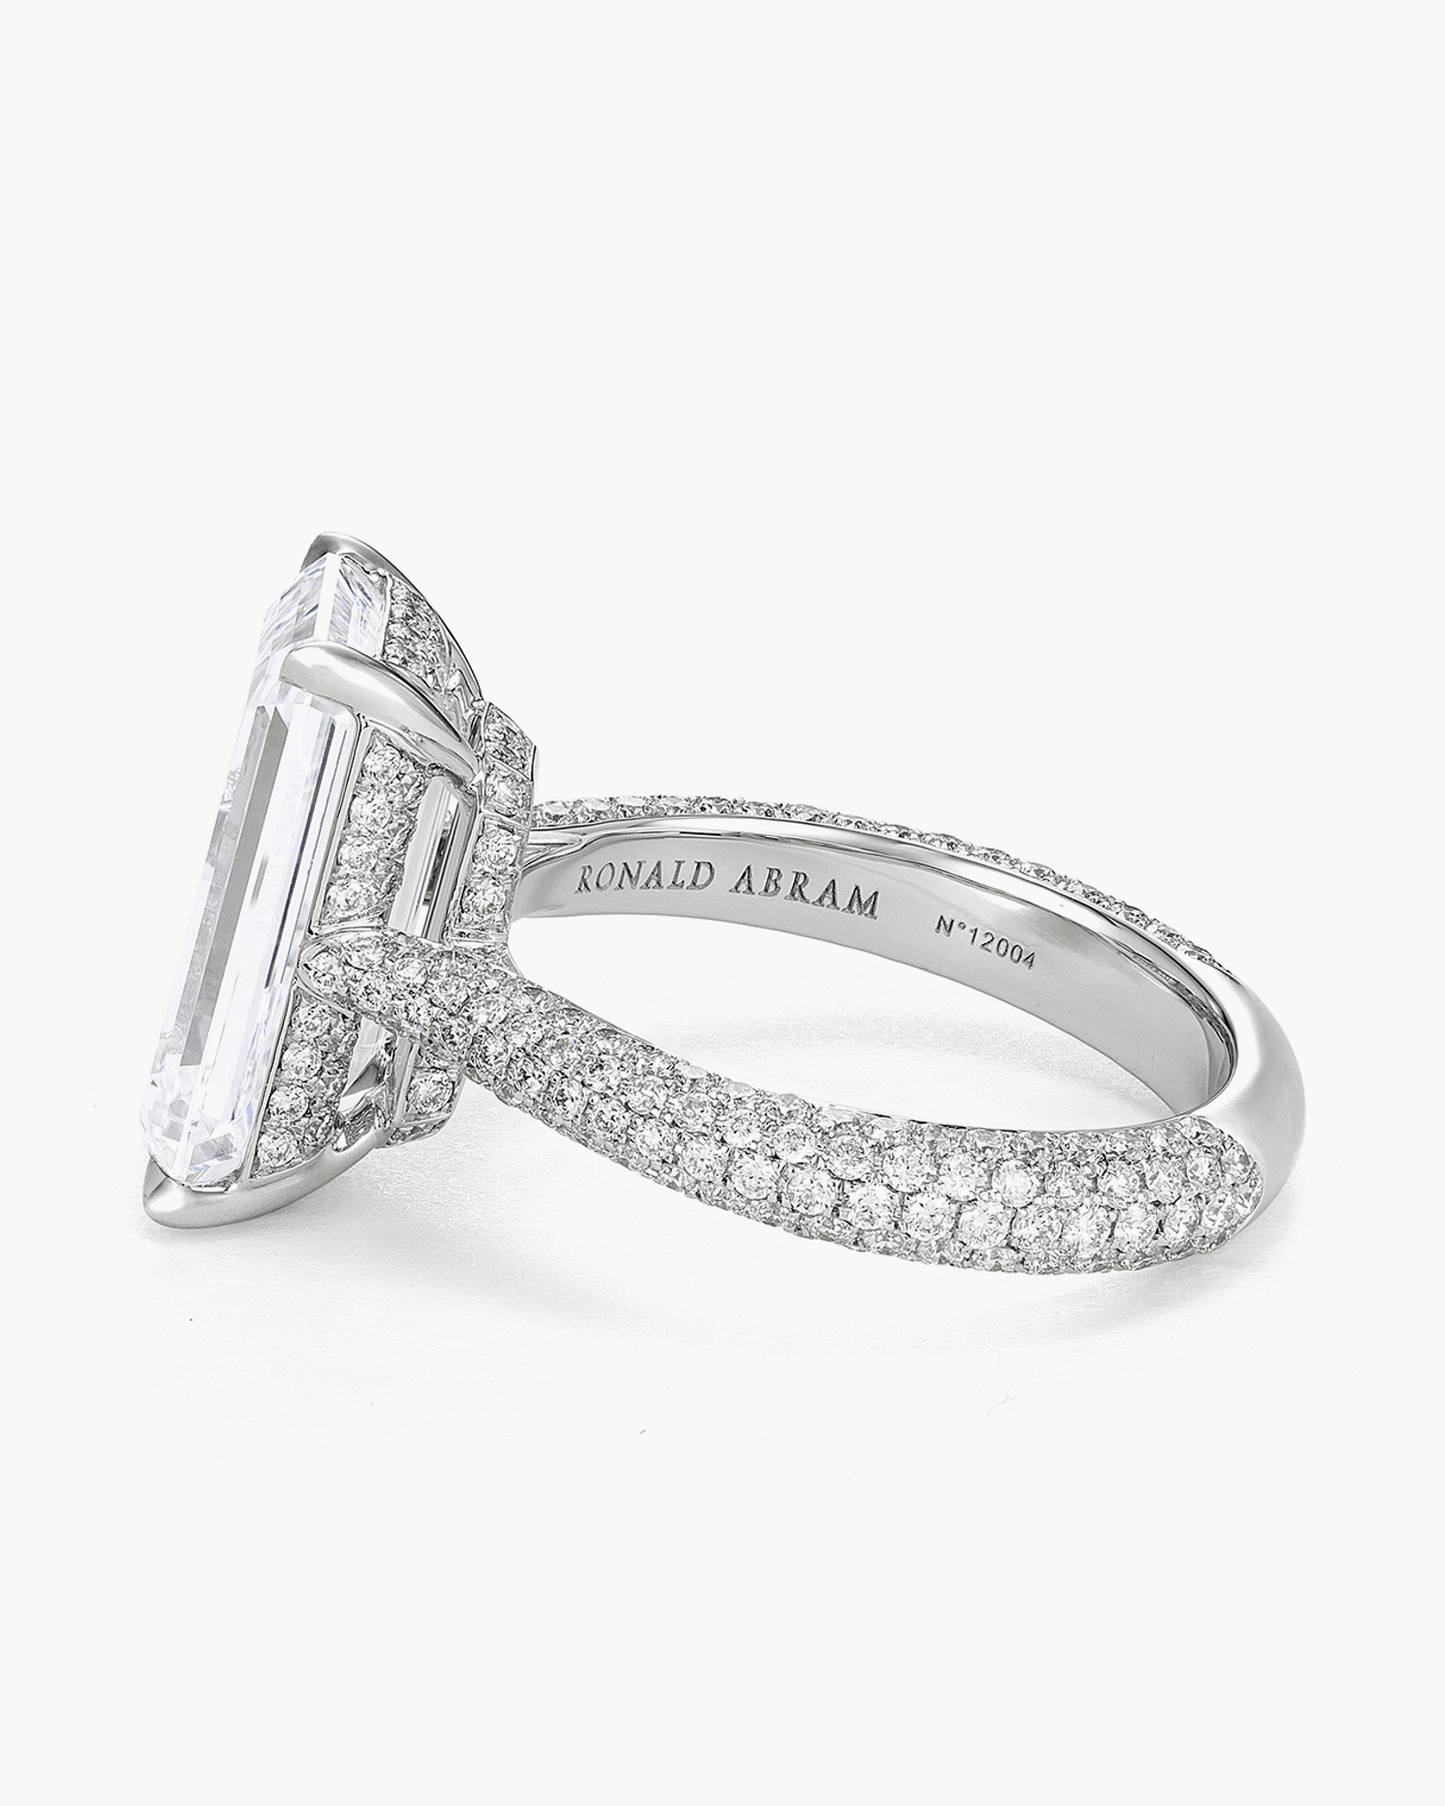 5.38 carat Emerald Cut Diamond Ring